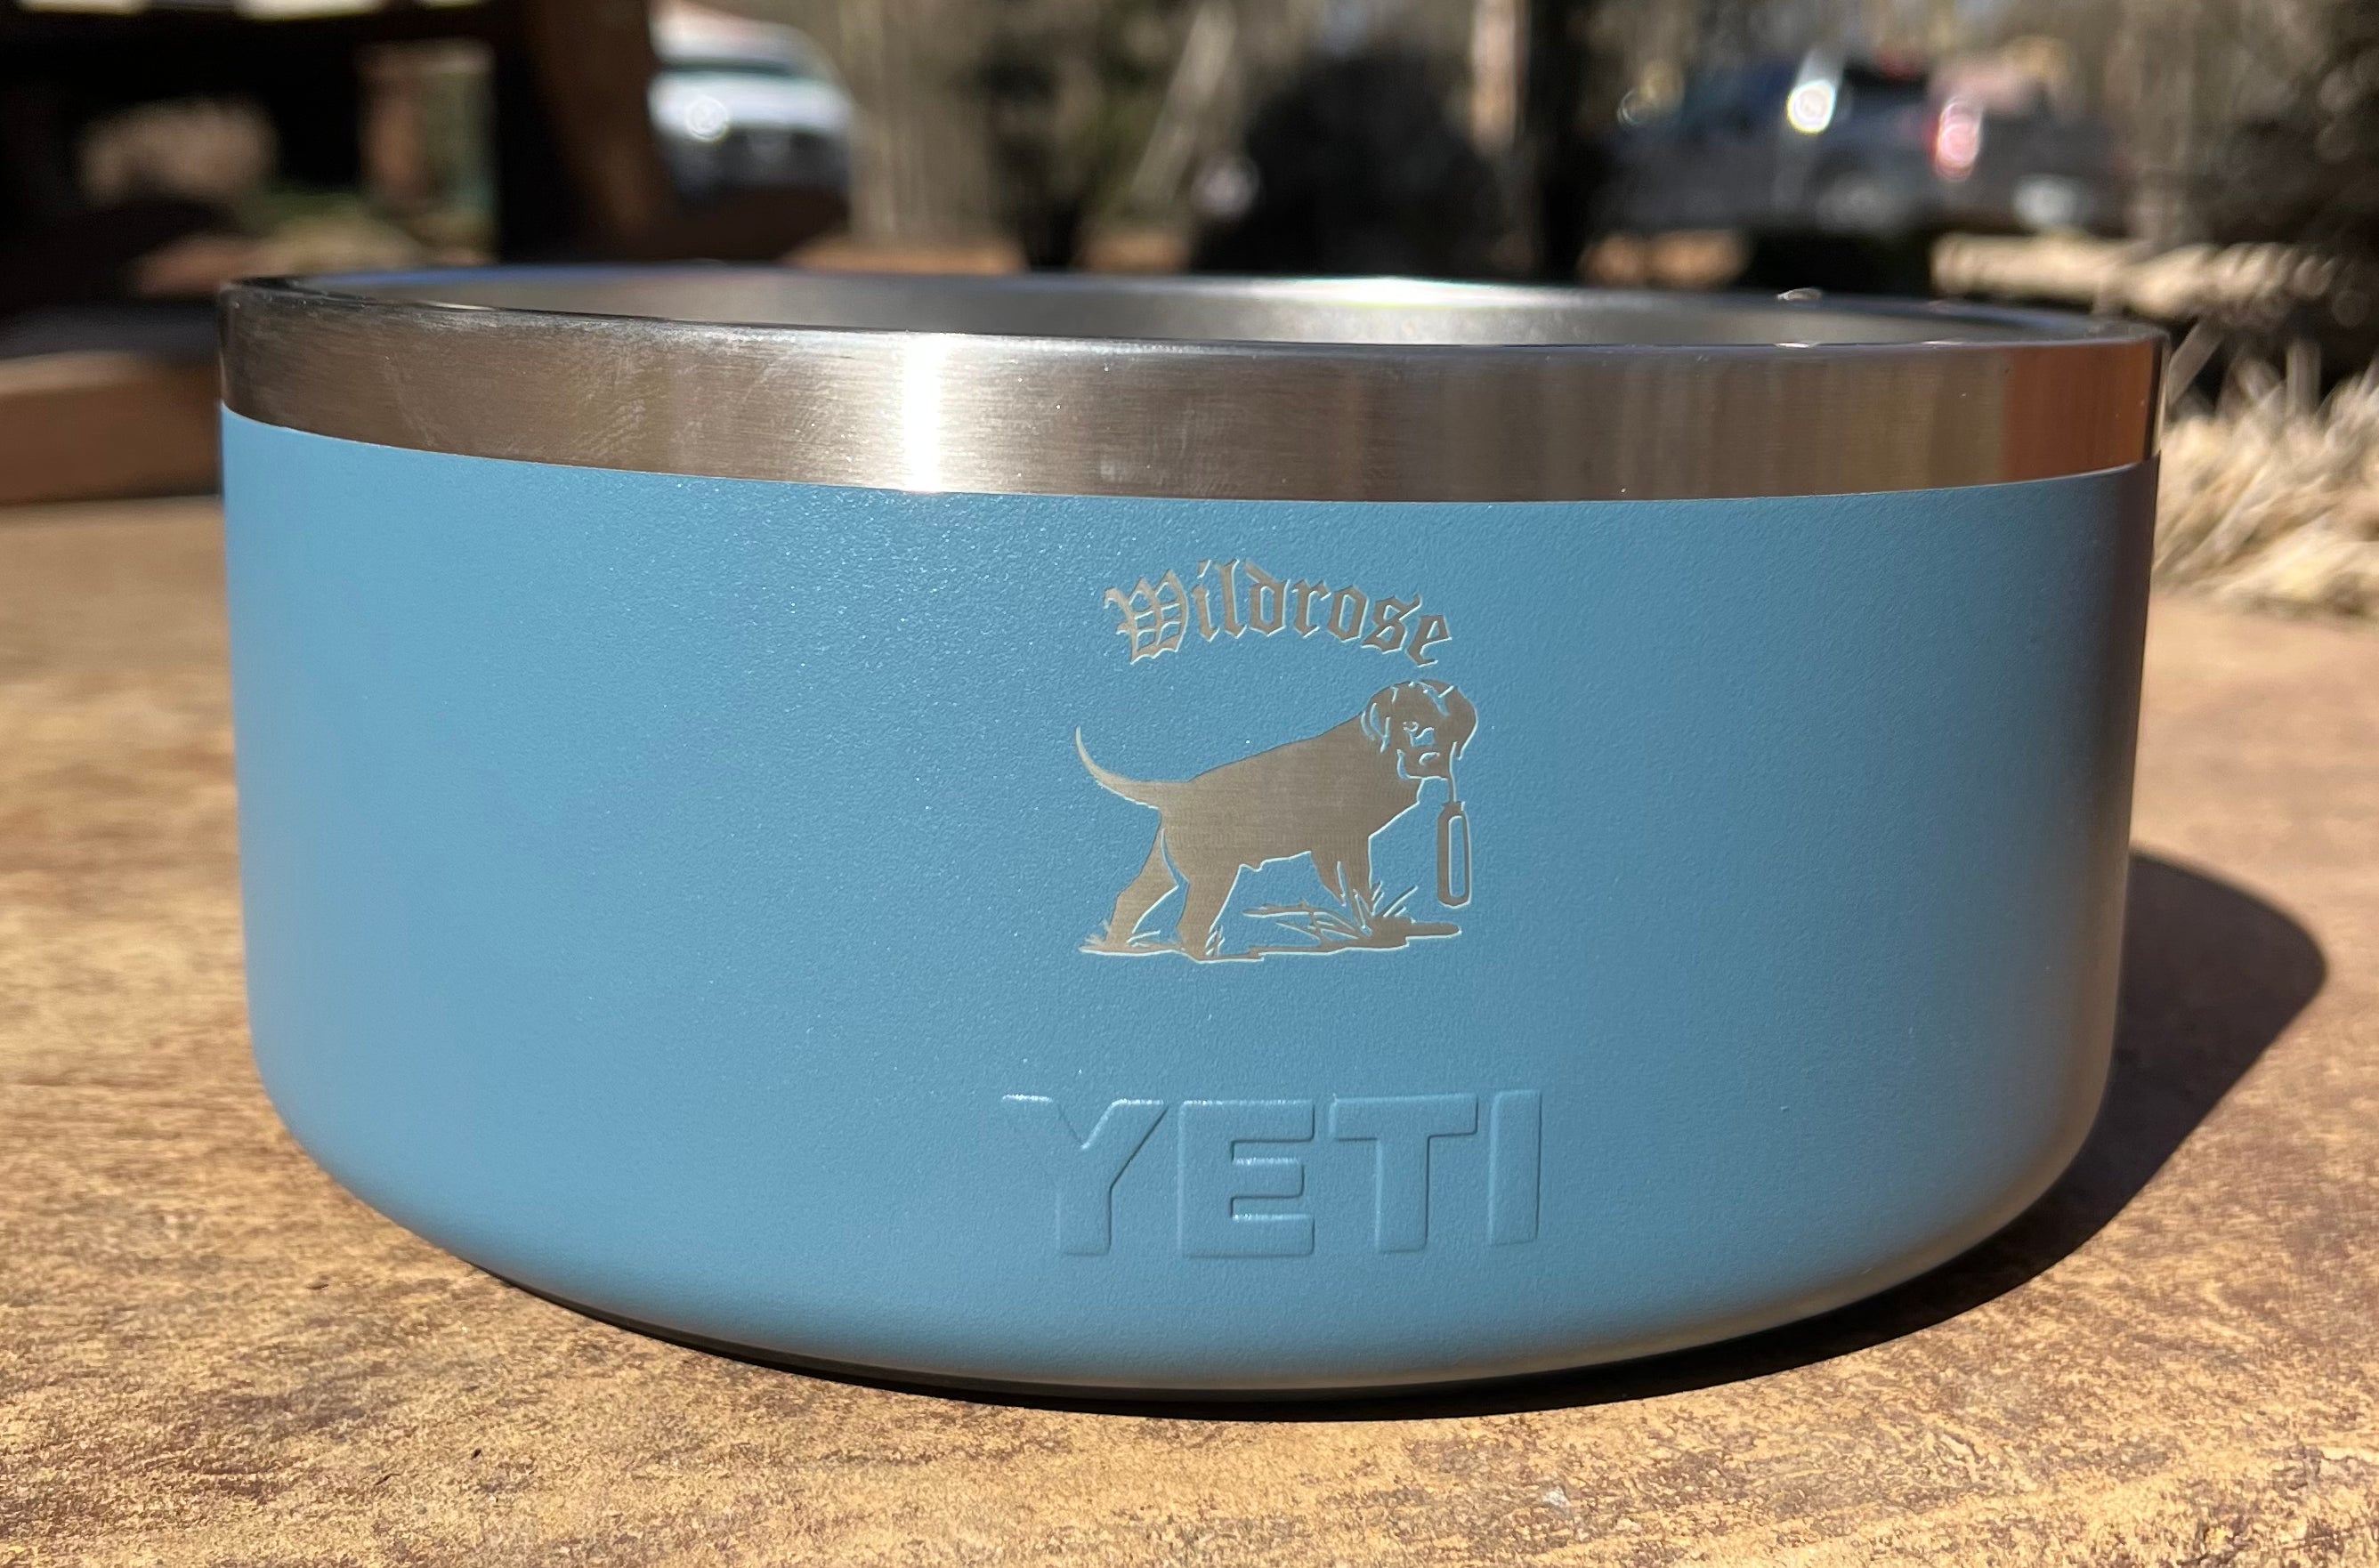 Review of the YETI Boomer Dog Bowl - Gun Dog